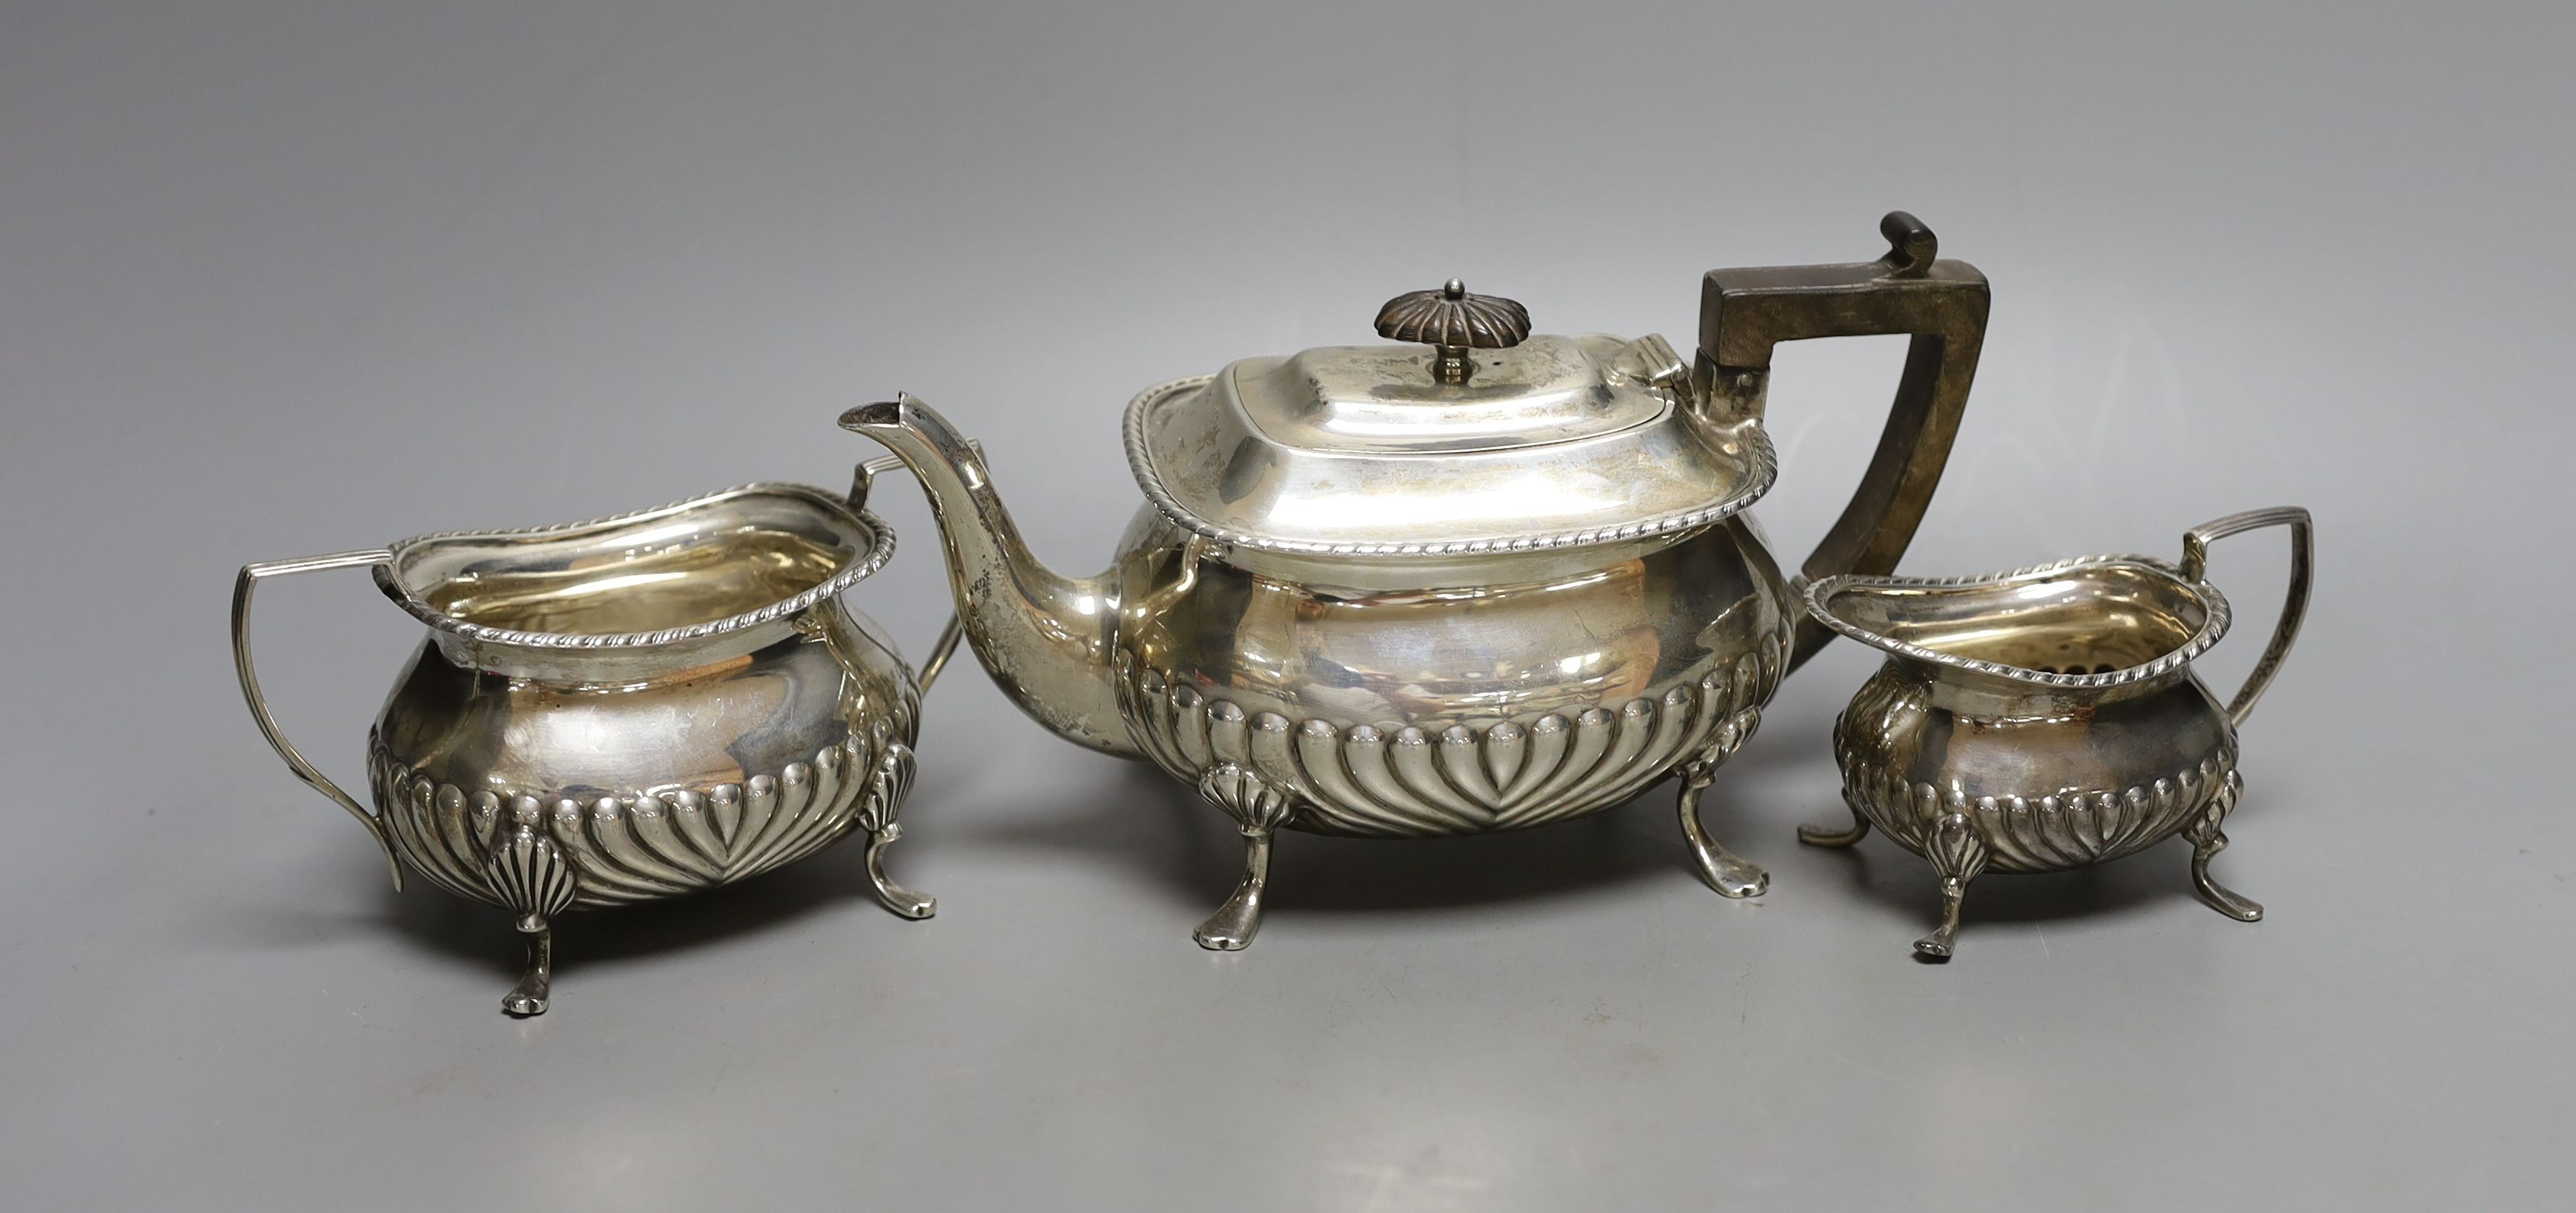 An Edwardian silver three piece bachelor's tea set, William Hutton & Sons, London, 1903, gross 17 oz.